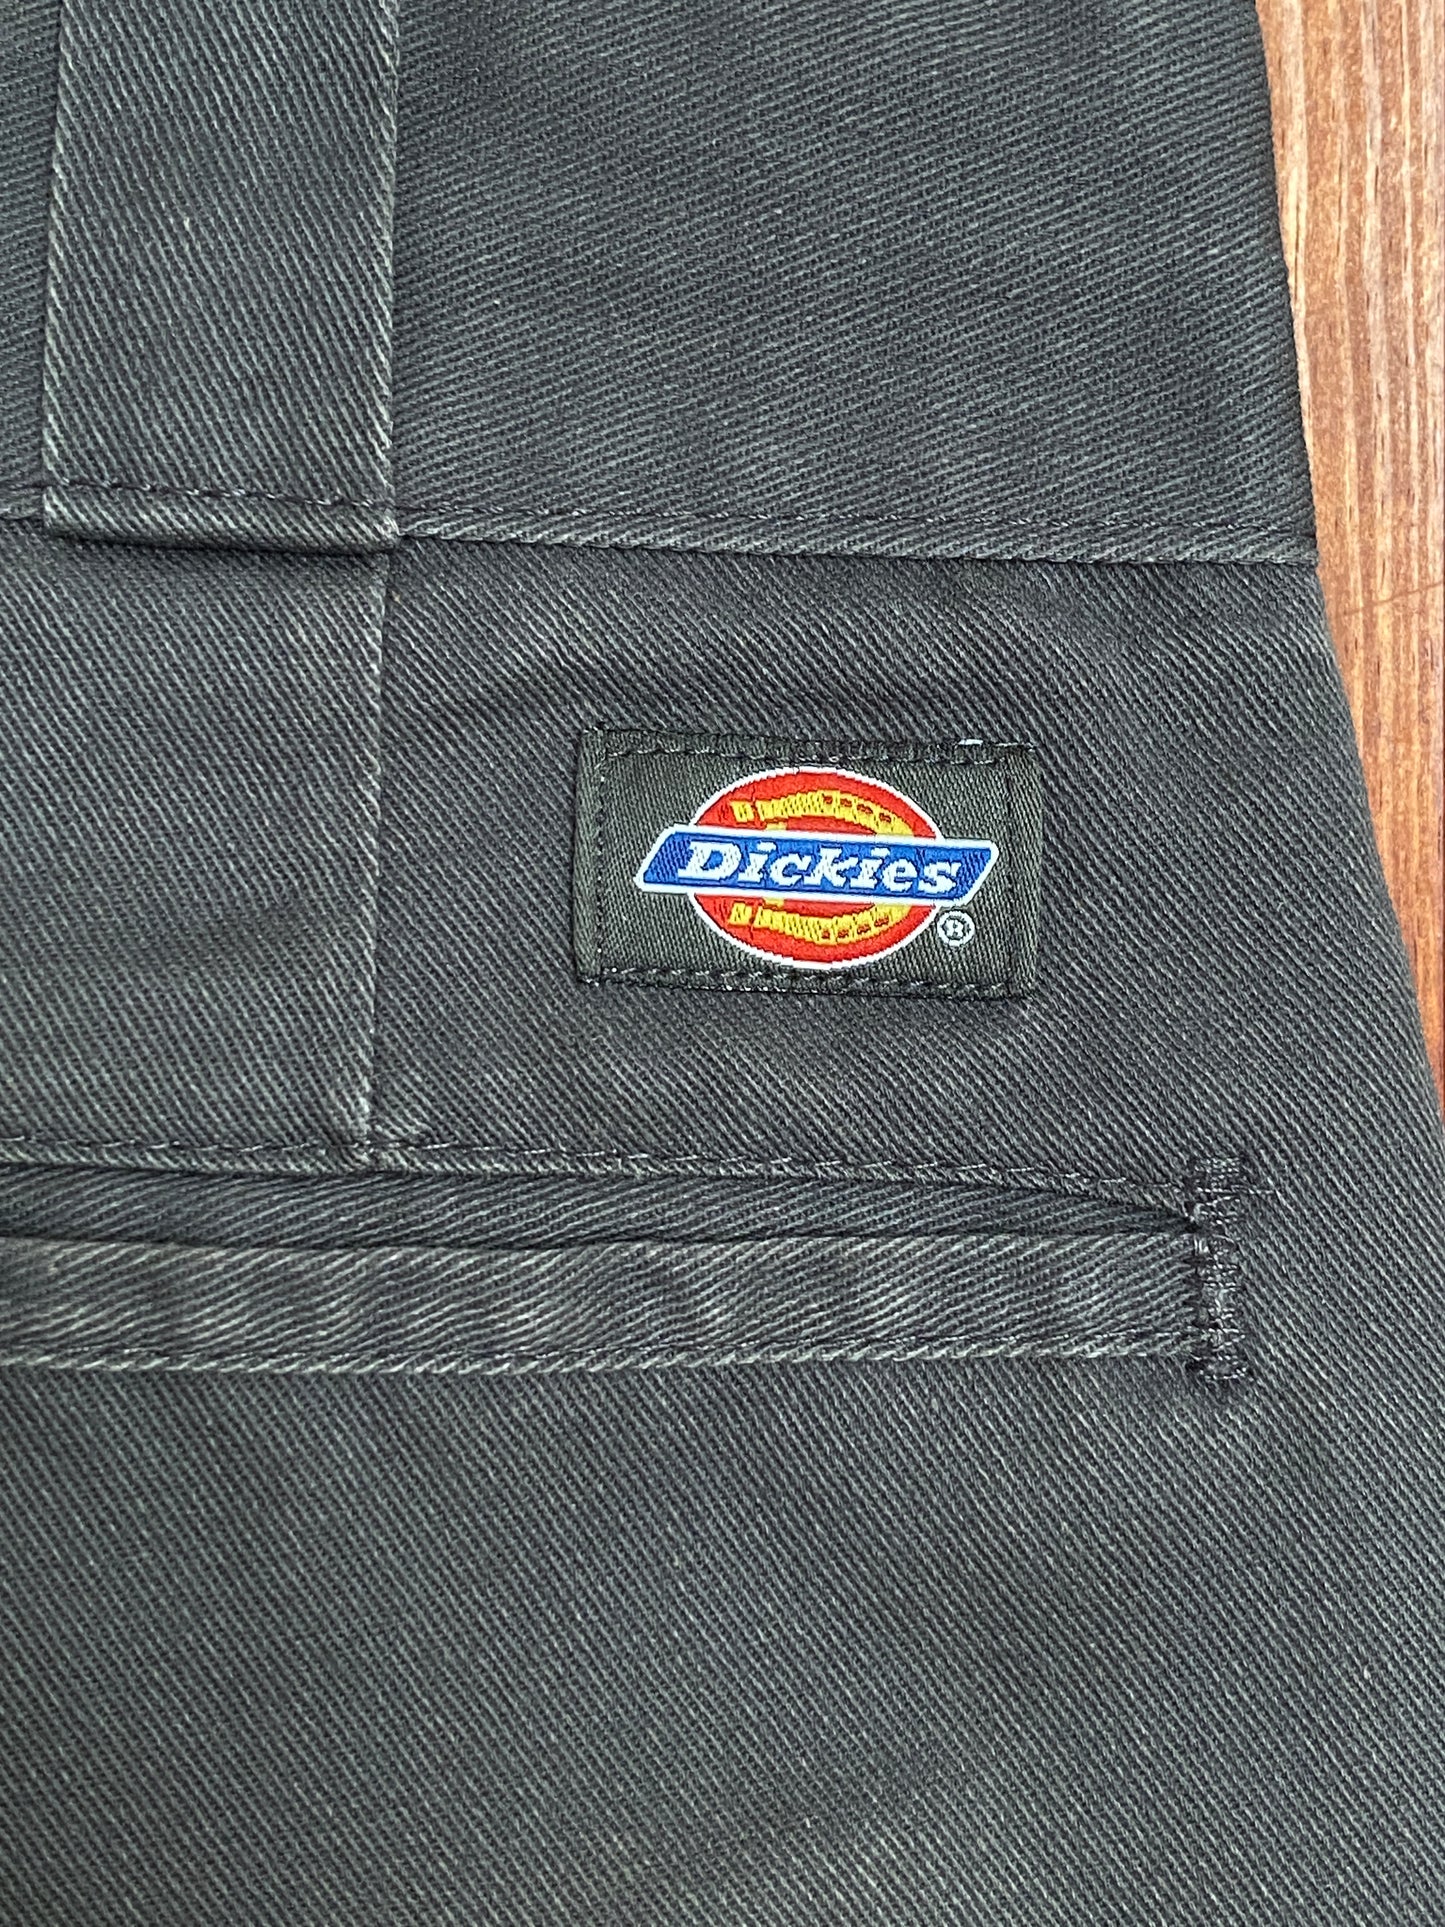 Grey Vintage Dickies Pants Model 874 Size 33X29: Classic Workwear Apparel